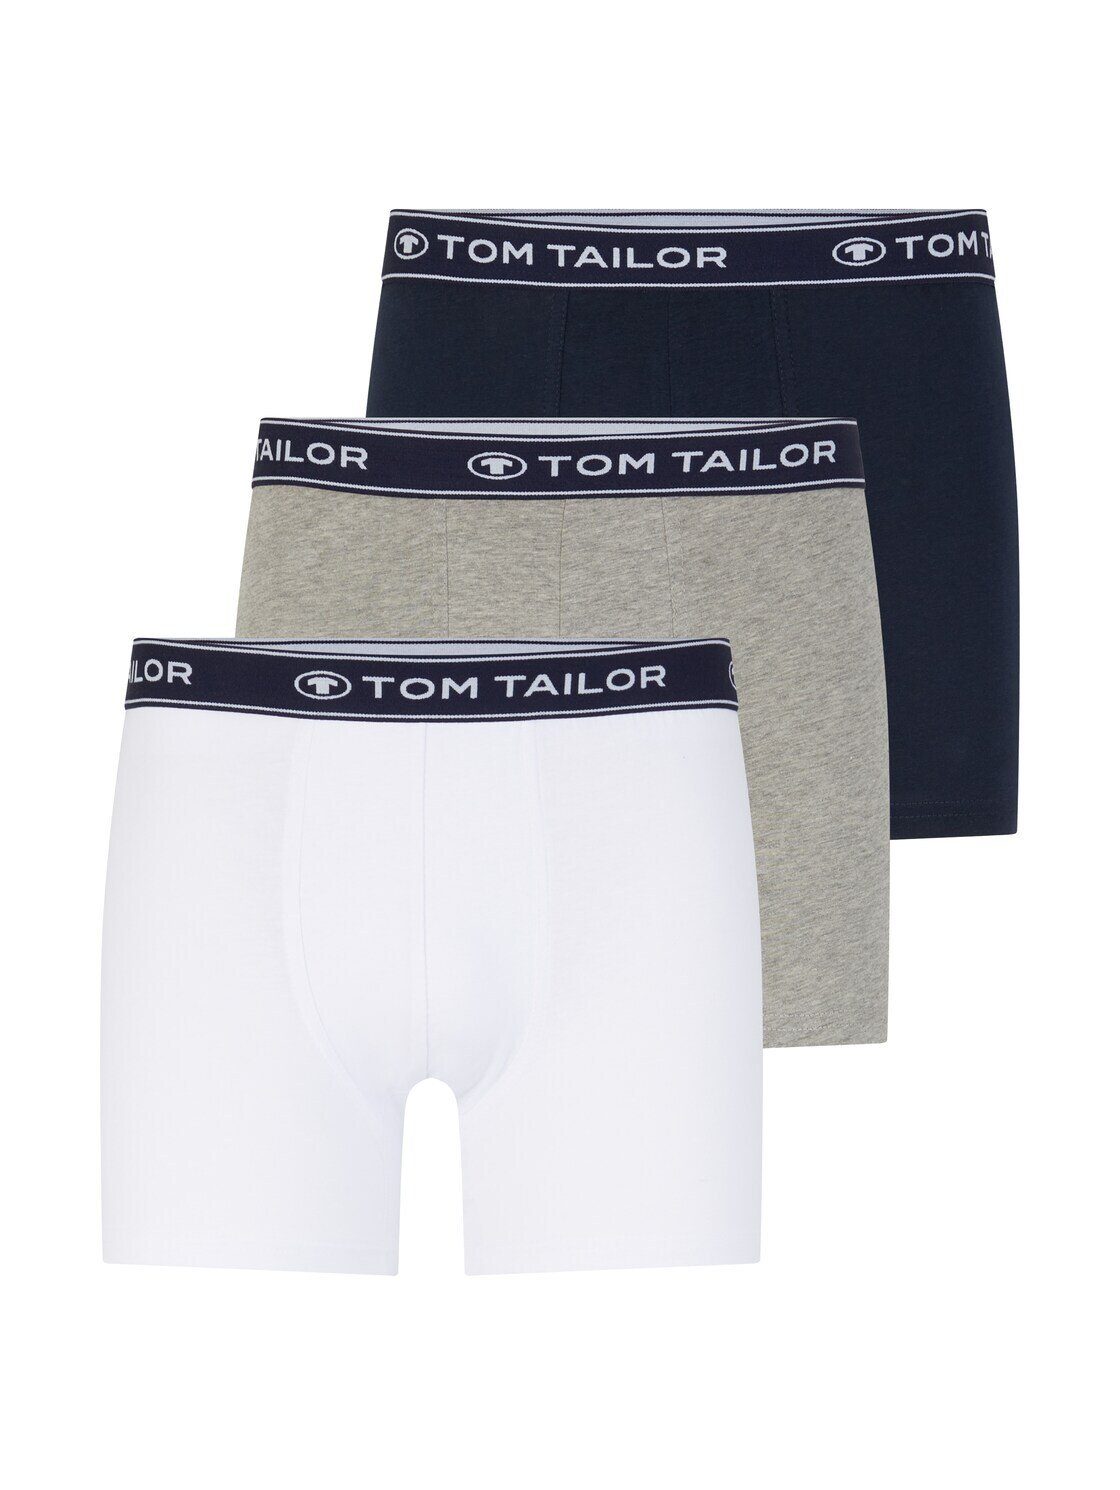 TOM TAILOR Boxershorts Webbund Dreierpack navy-melange-white im Pants Long mit (im Dreierpack)